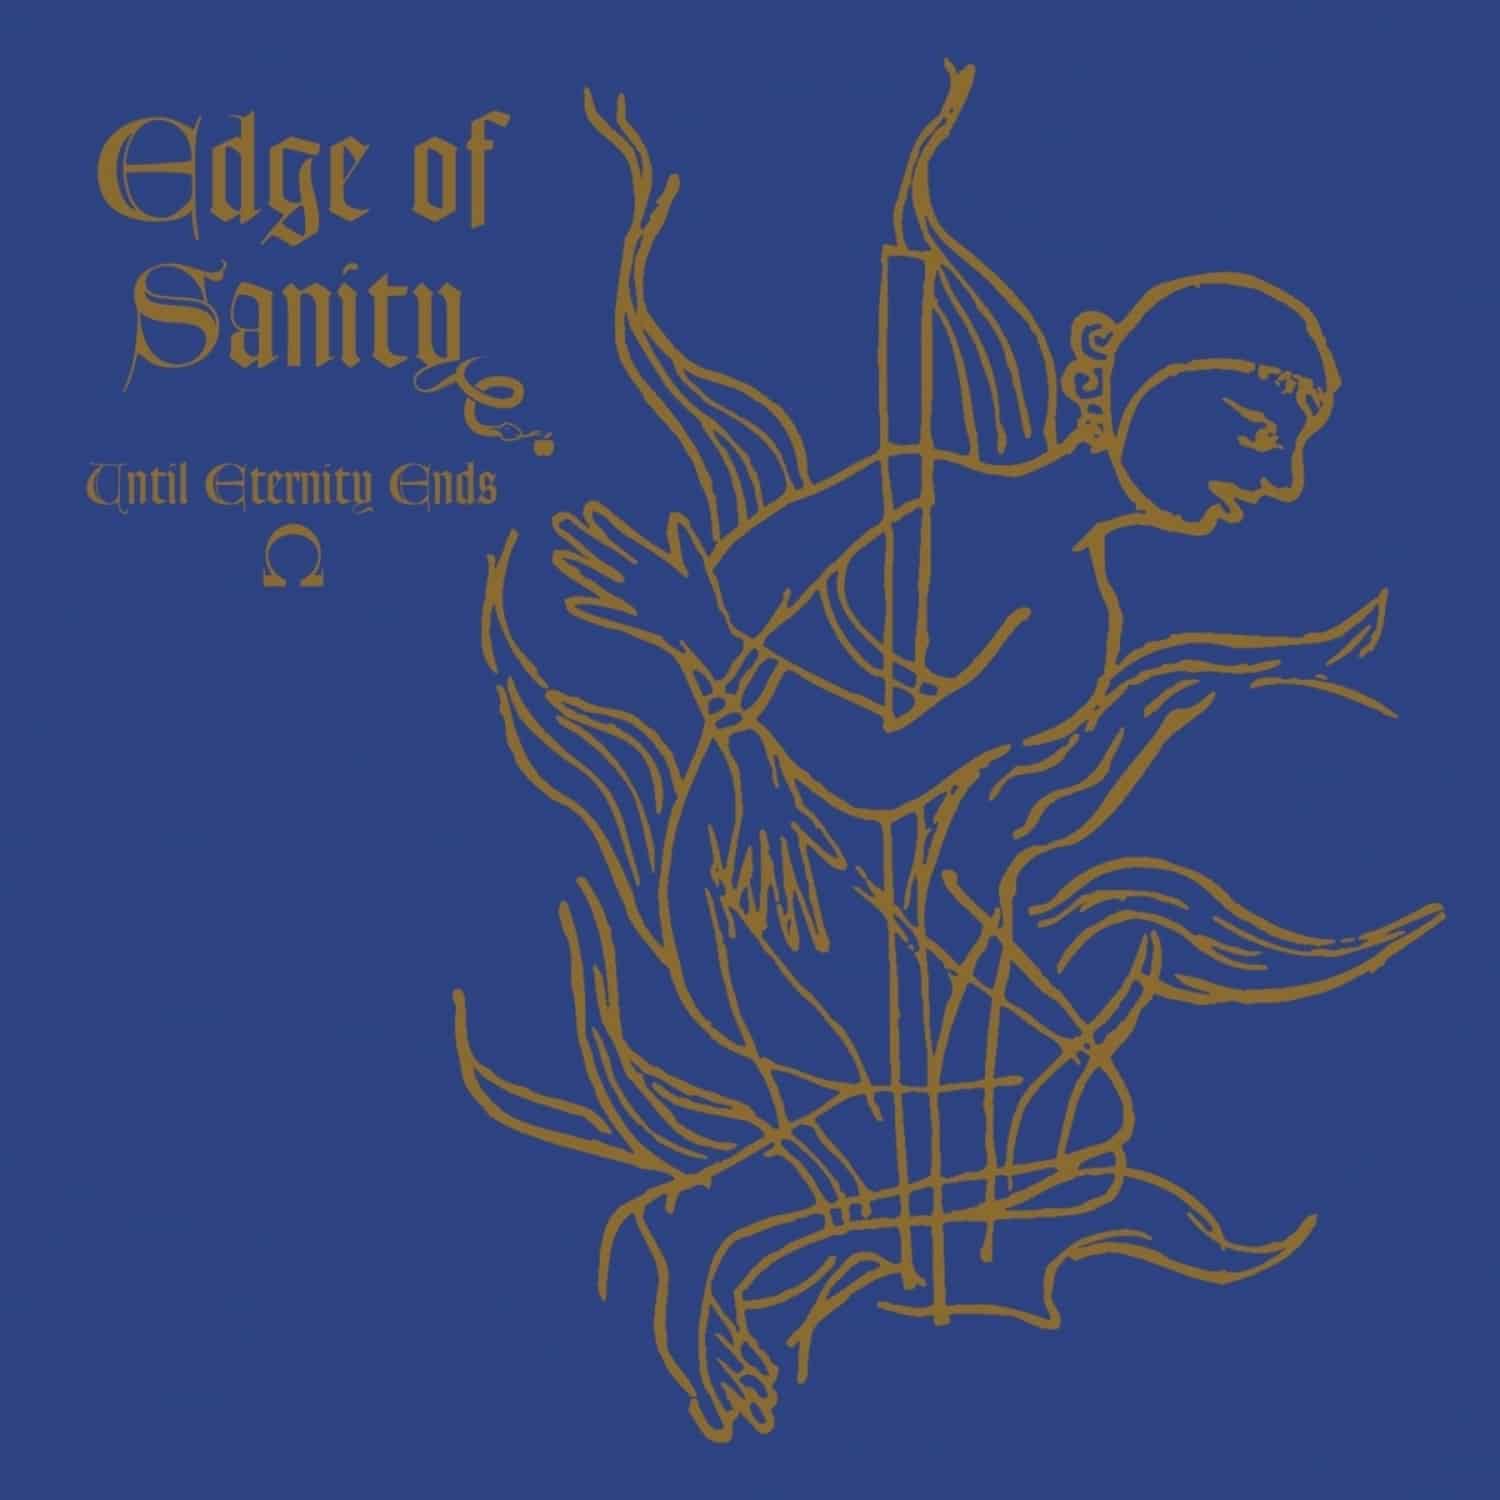 Edge Of Sanity - UNTIL ETERNITY ENDS - EP 